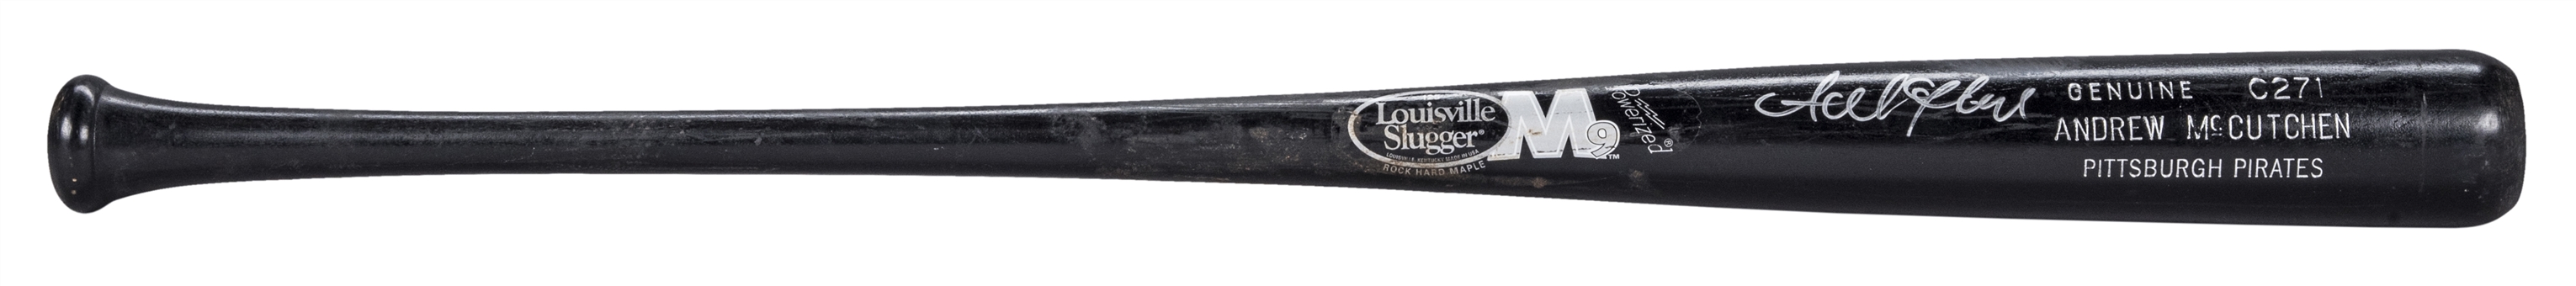 2009 Andrew McCutchen Game Used Louisville Slugger C271 Model Bat (Labeled 2008) - Rookie Season! (PSA/DNA GU 8.5 & JSA)